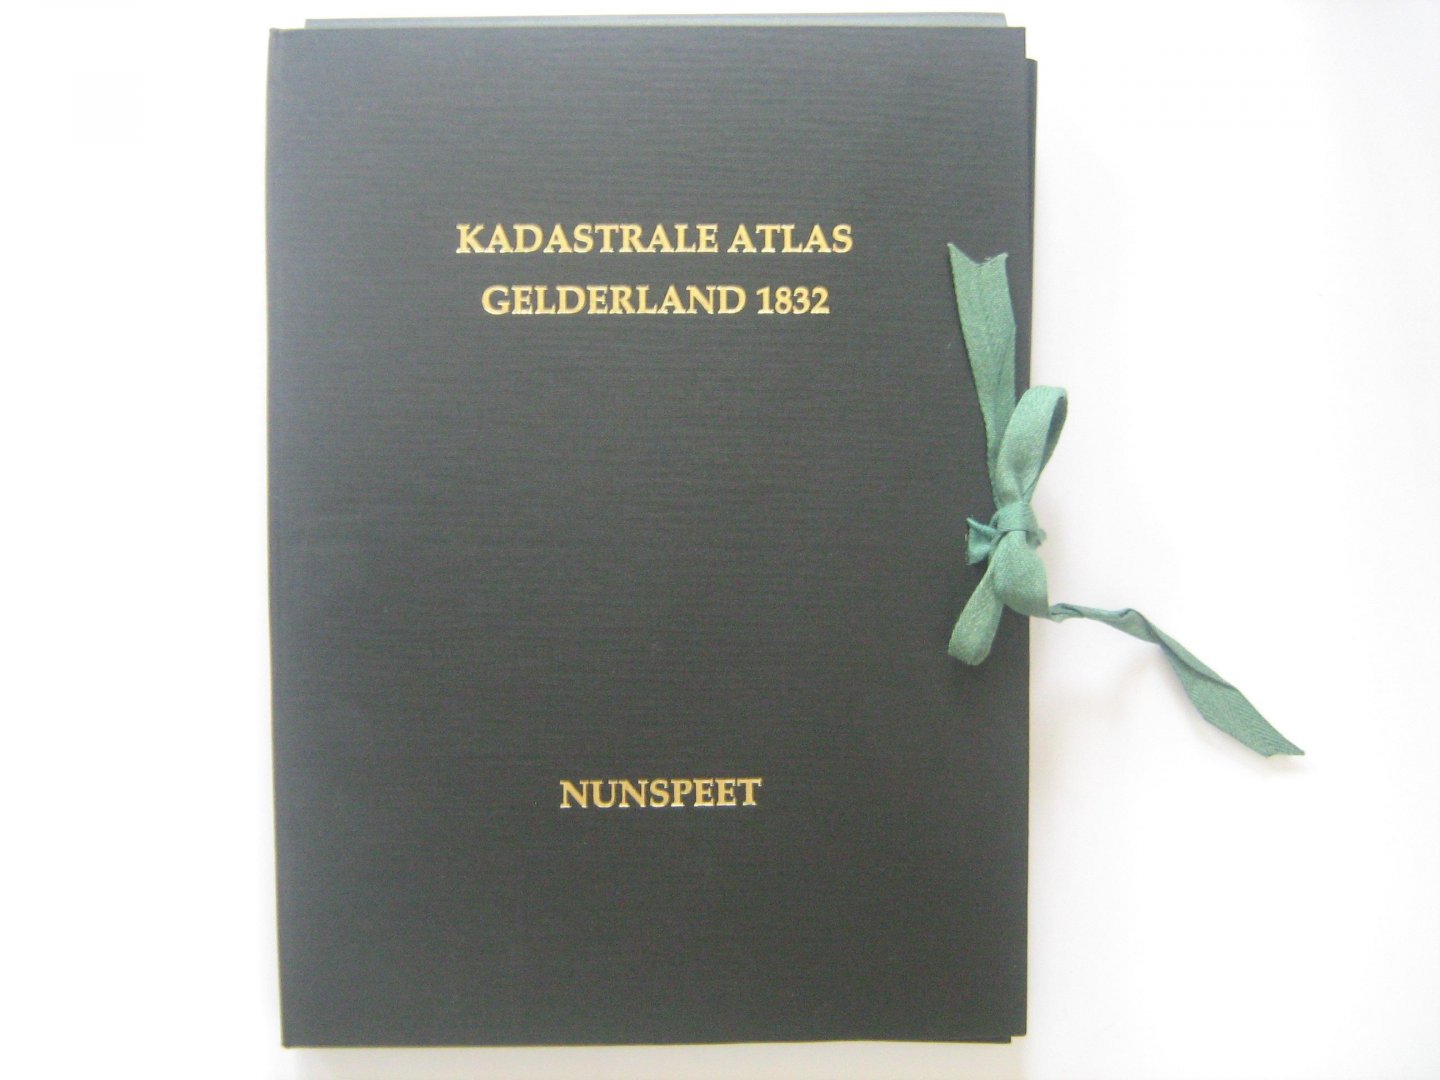  - Kadastrale Atlas Gelderland 1832, Nunspeet - Tekst en kadastrale gegevens.